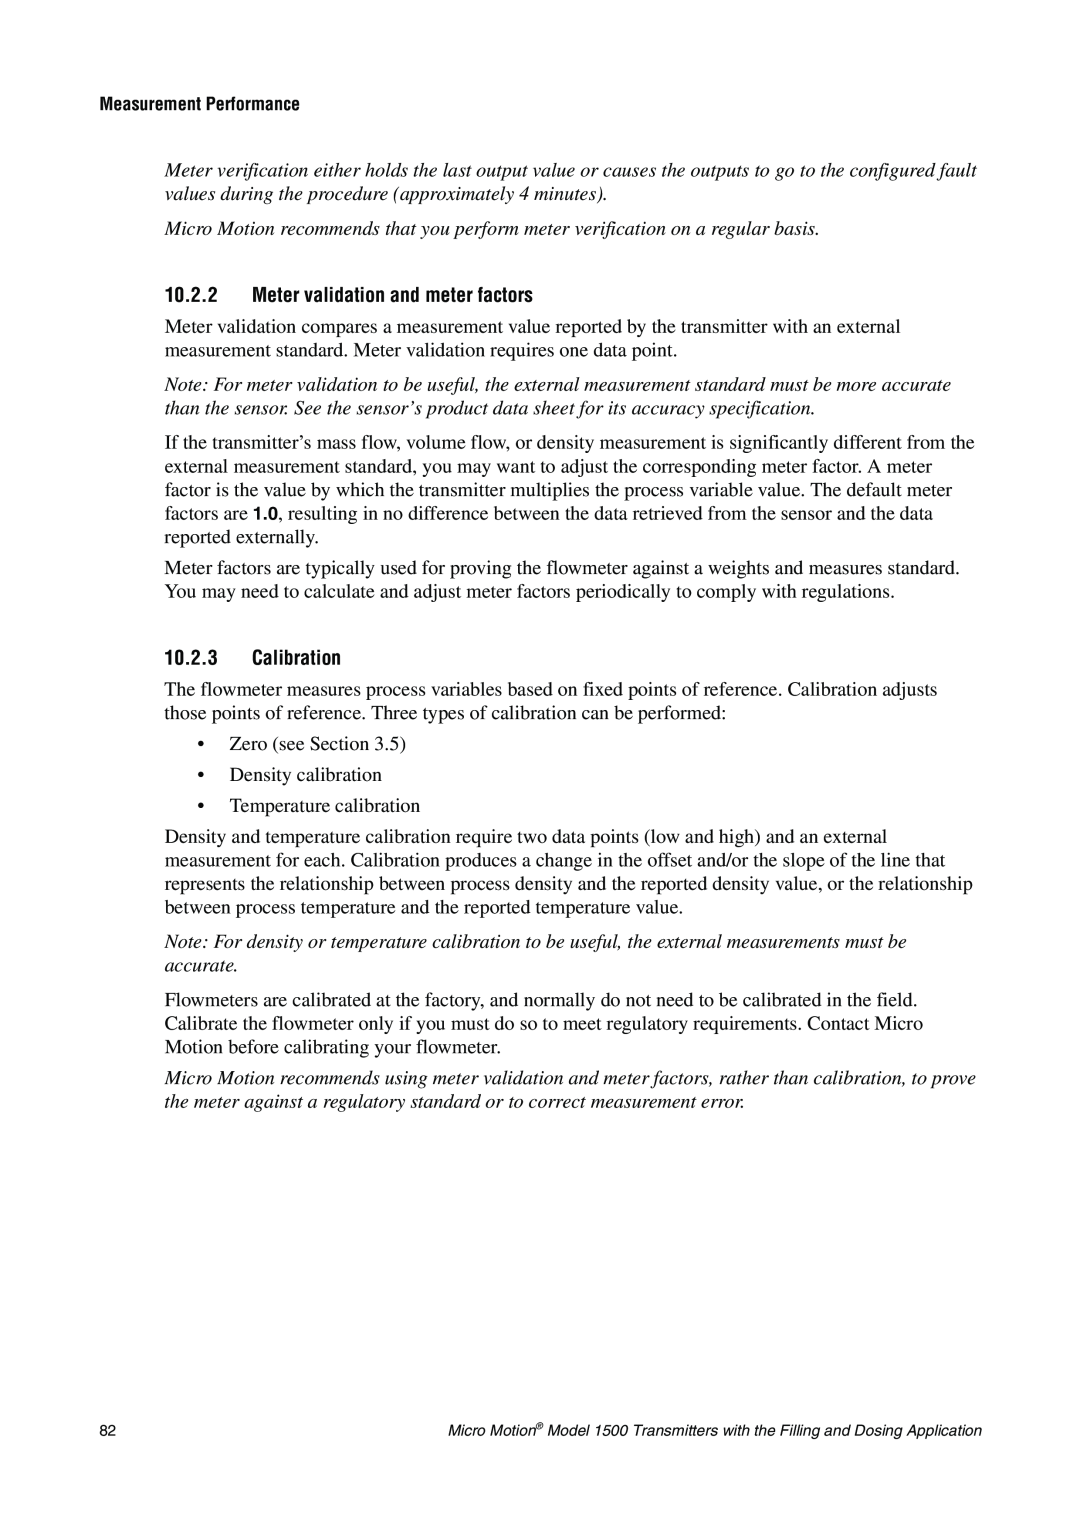 Emerson Process Management 1500 manual 10.2.2Meter validation and meter factors, 10.2.3Calibration 